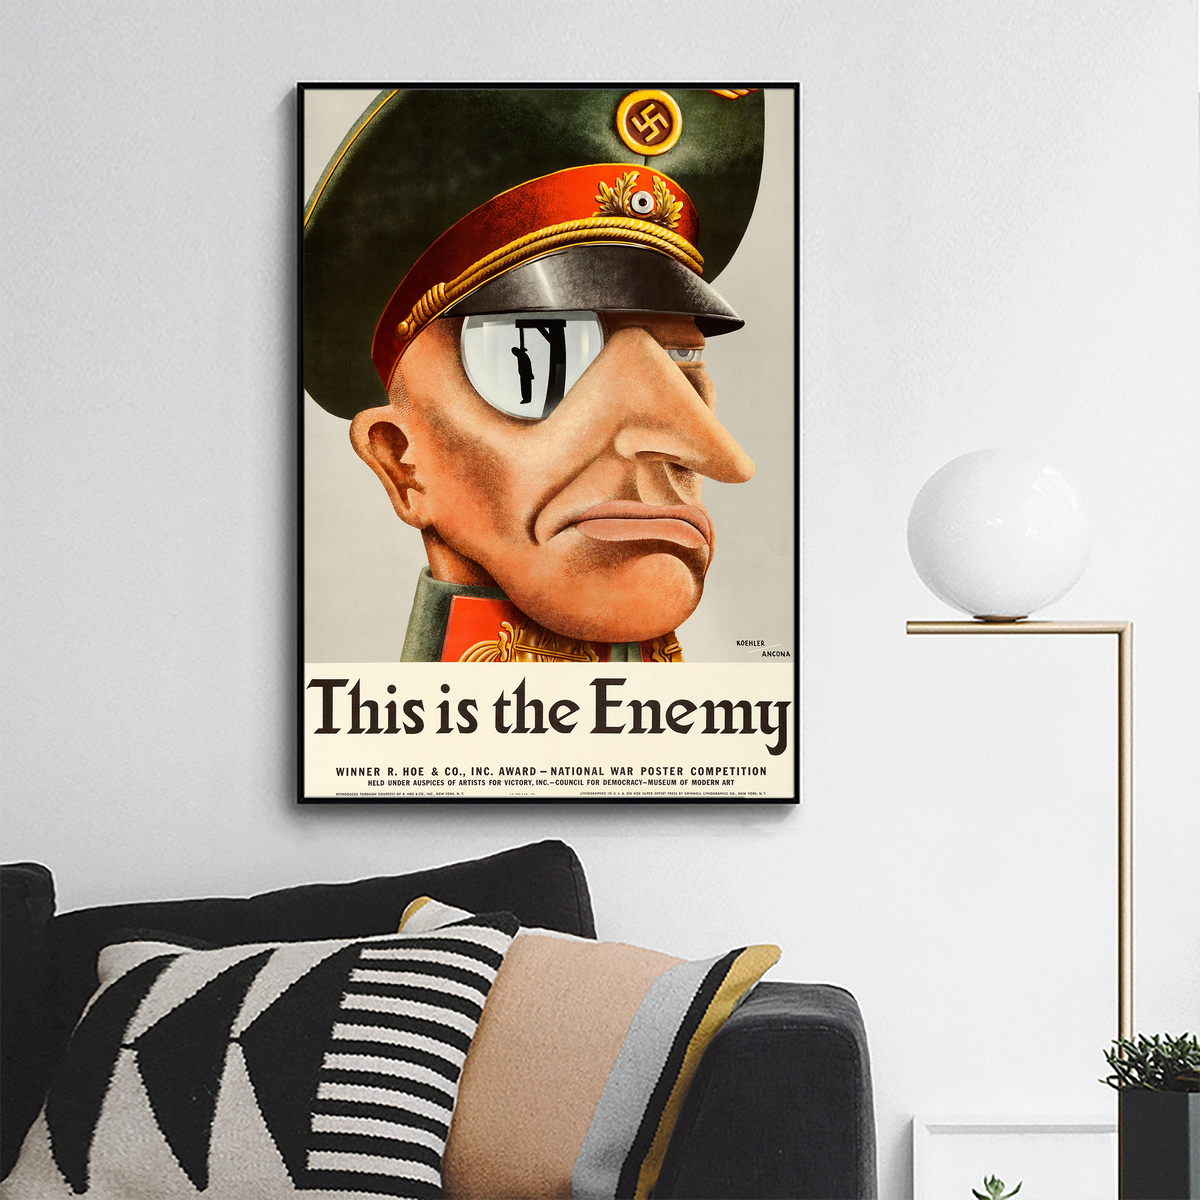 World War II Propaganda (R. Hoe & Co., 1942)